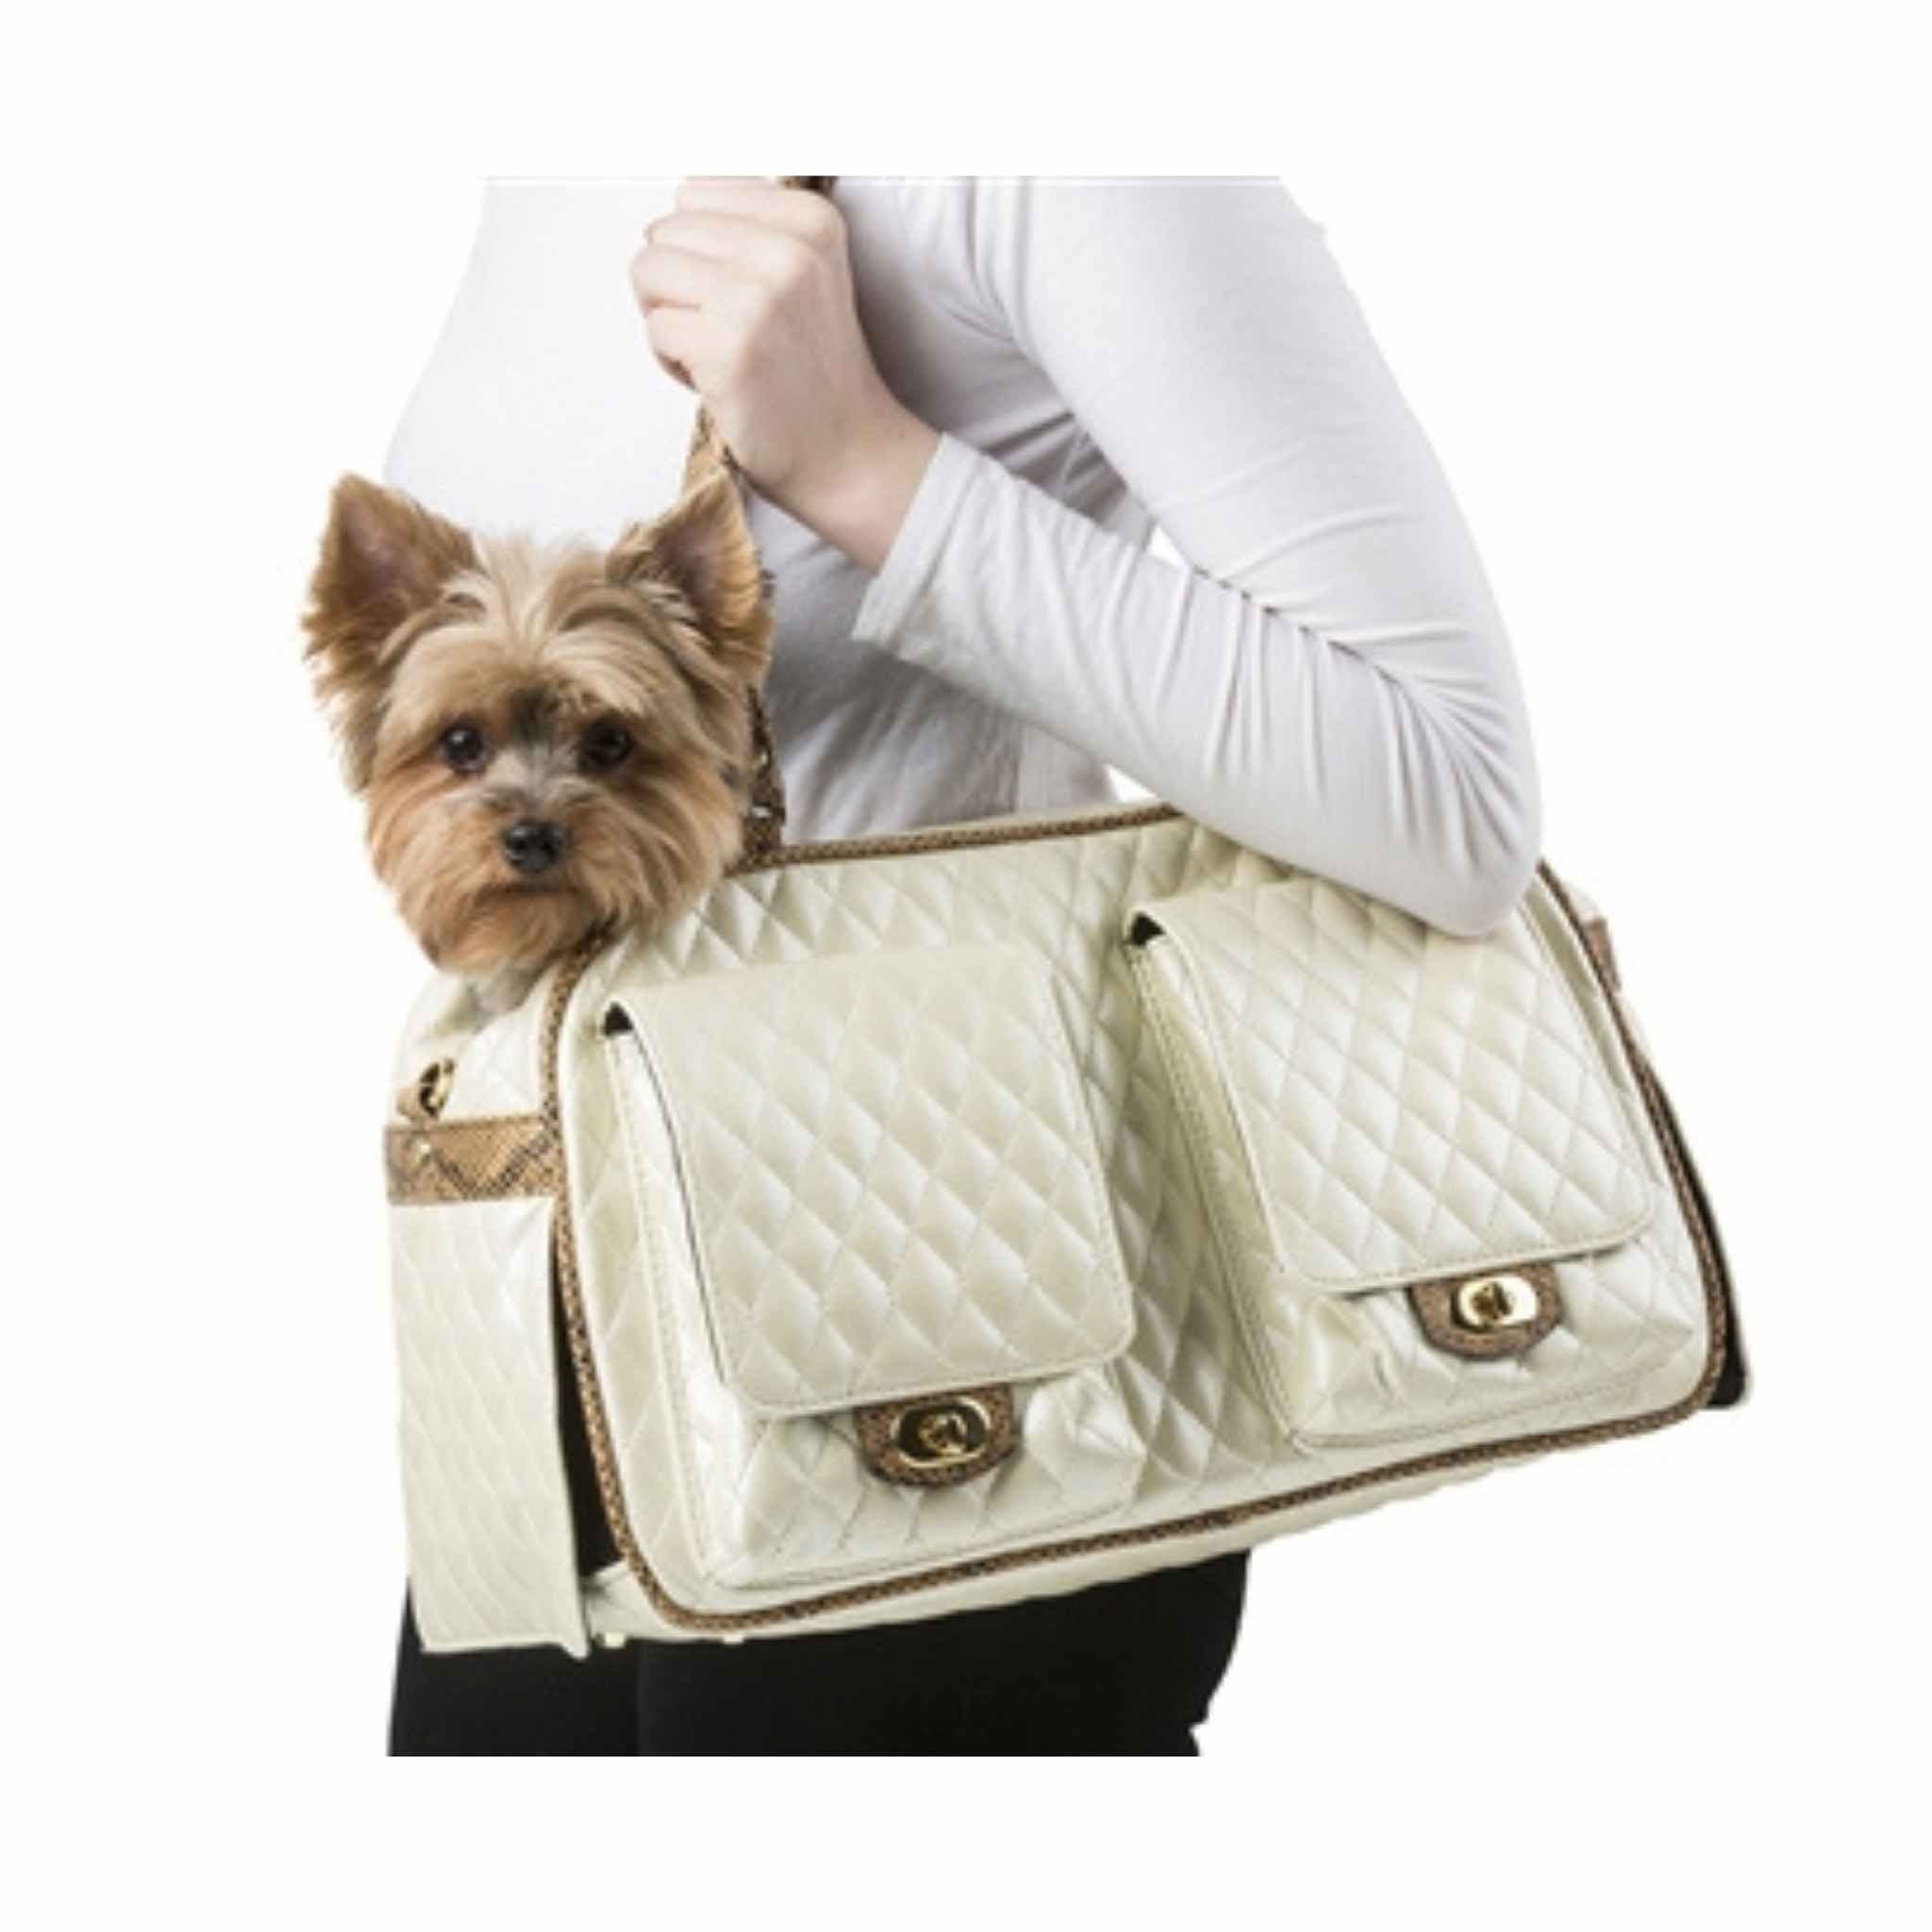 CHANEL New Travel Line Dog Carrier Bag Pet Carry Bag Small Dog Black Used B   eBay